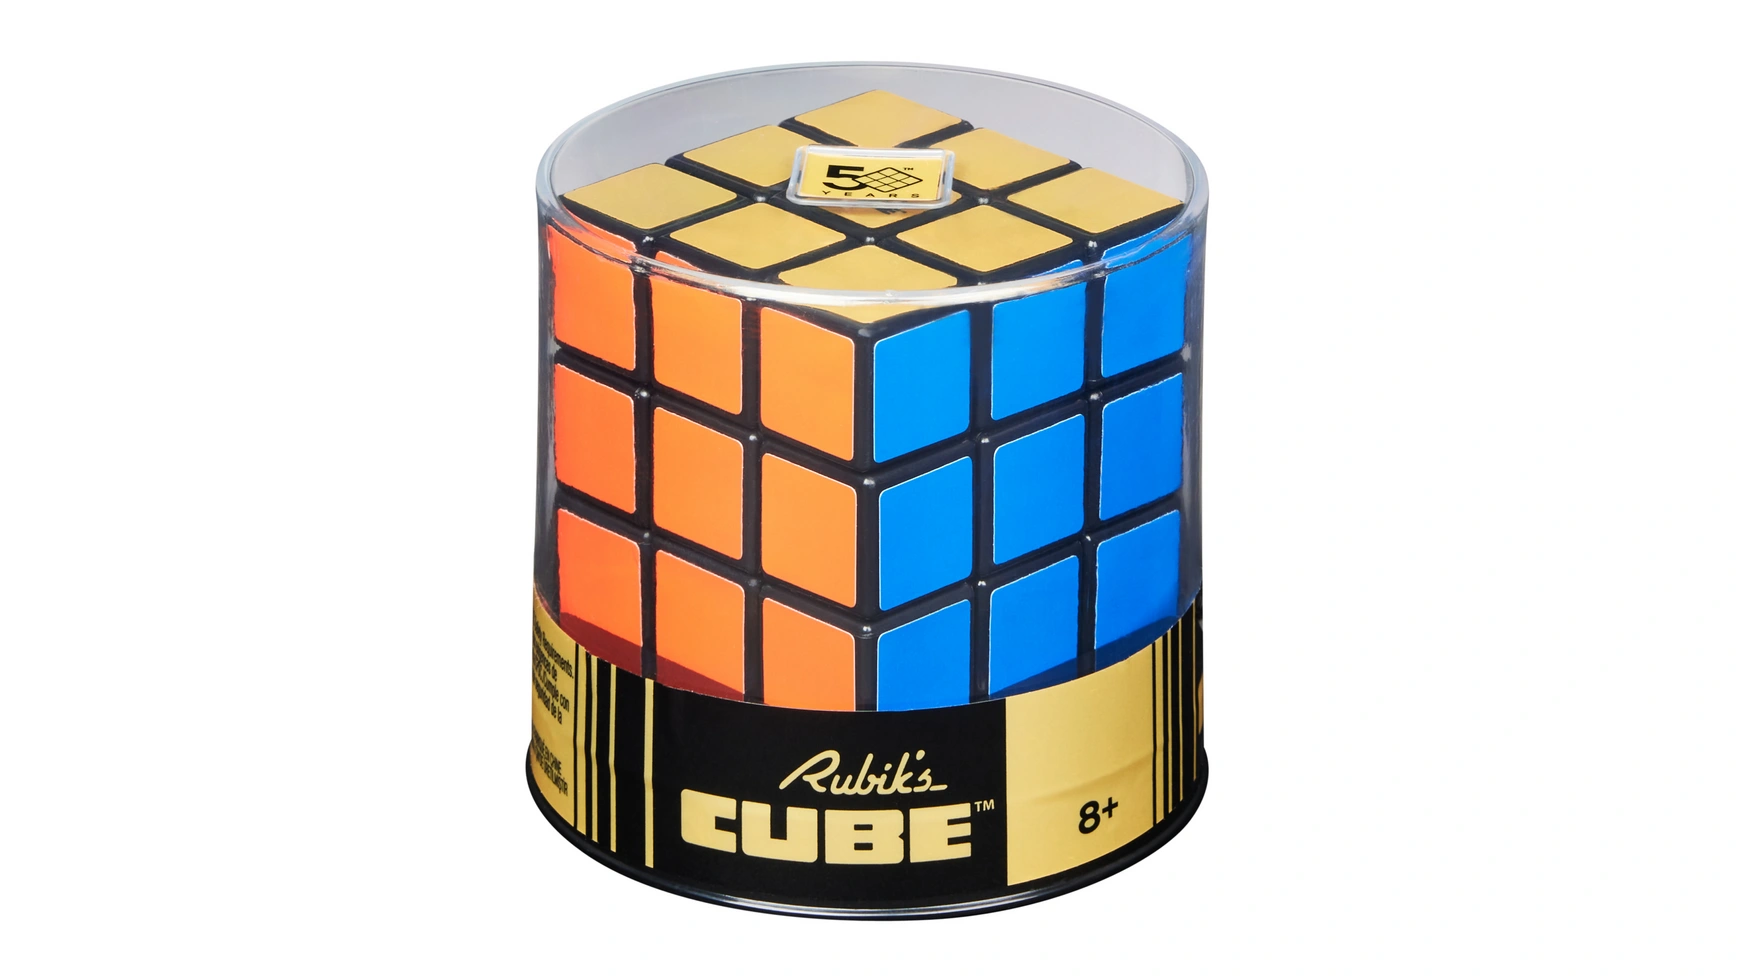 Ретро-кубик Рубика 3x3 Кубик Рубика кубик 3x3, внешний вид которого напоминает оригинал 50-летней давности Spin Master скоростной кубик рубика moyu meilong 3x3 m color